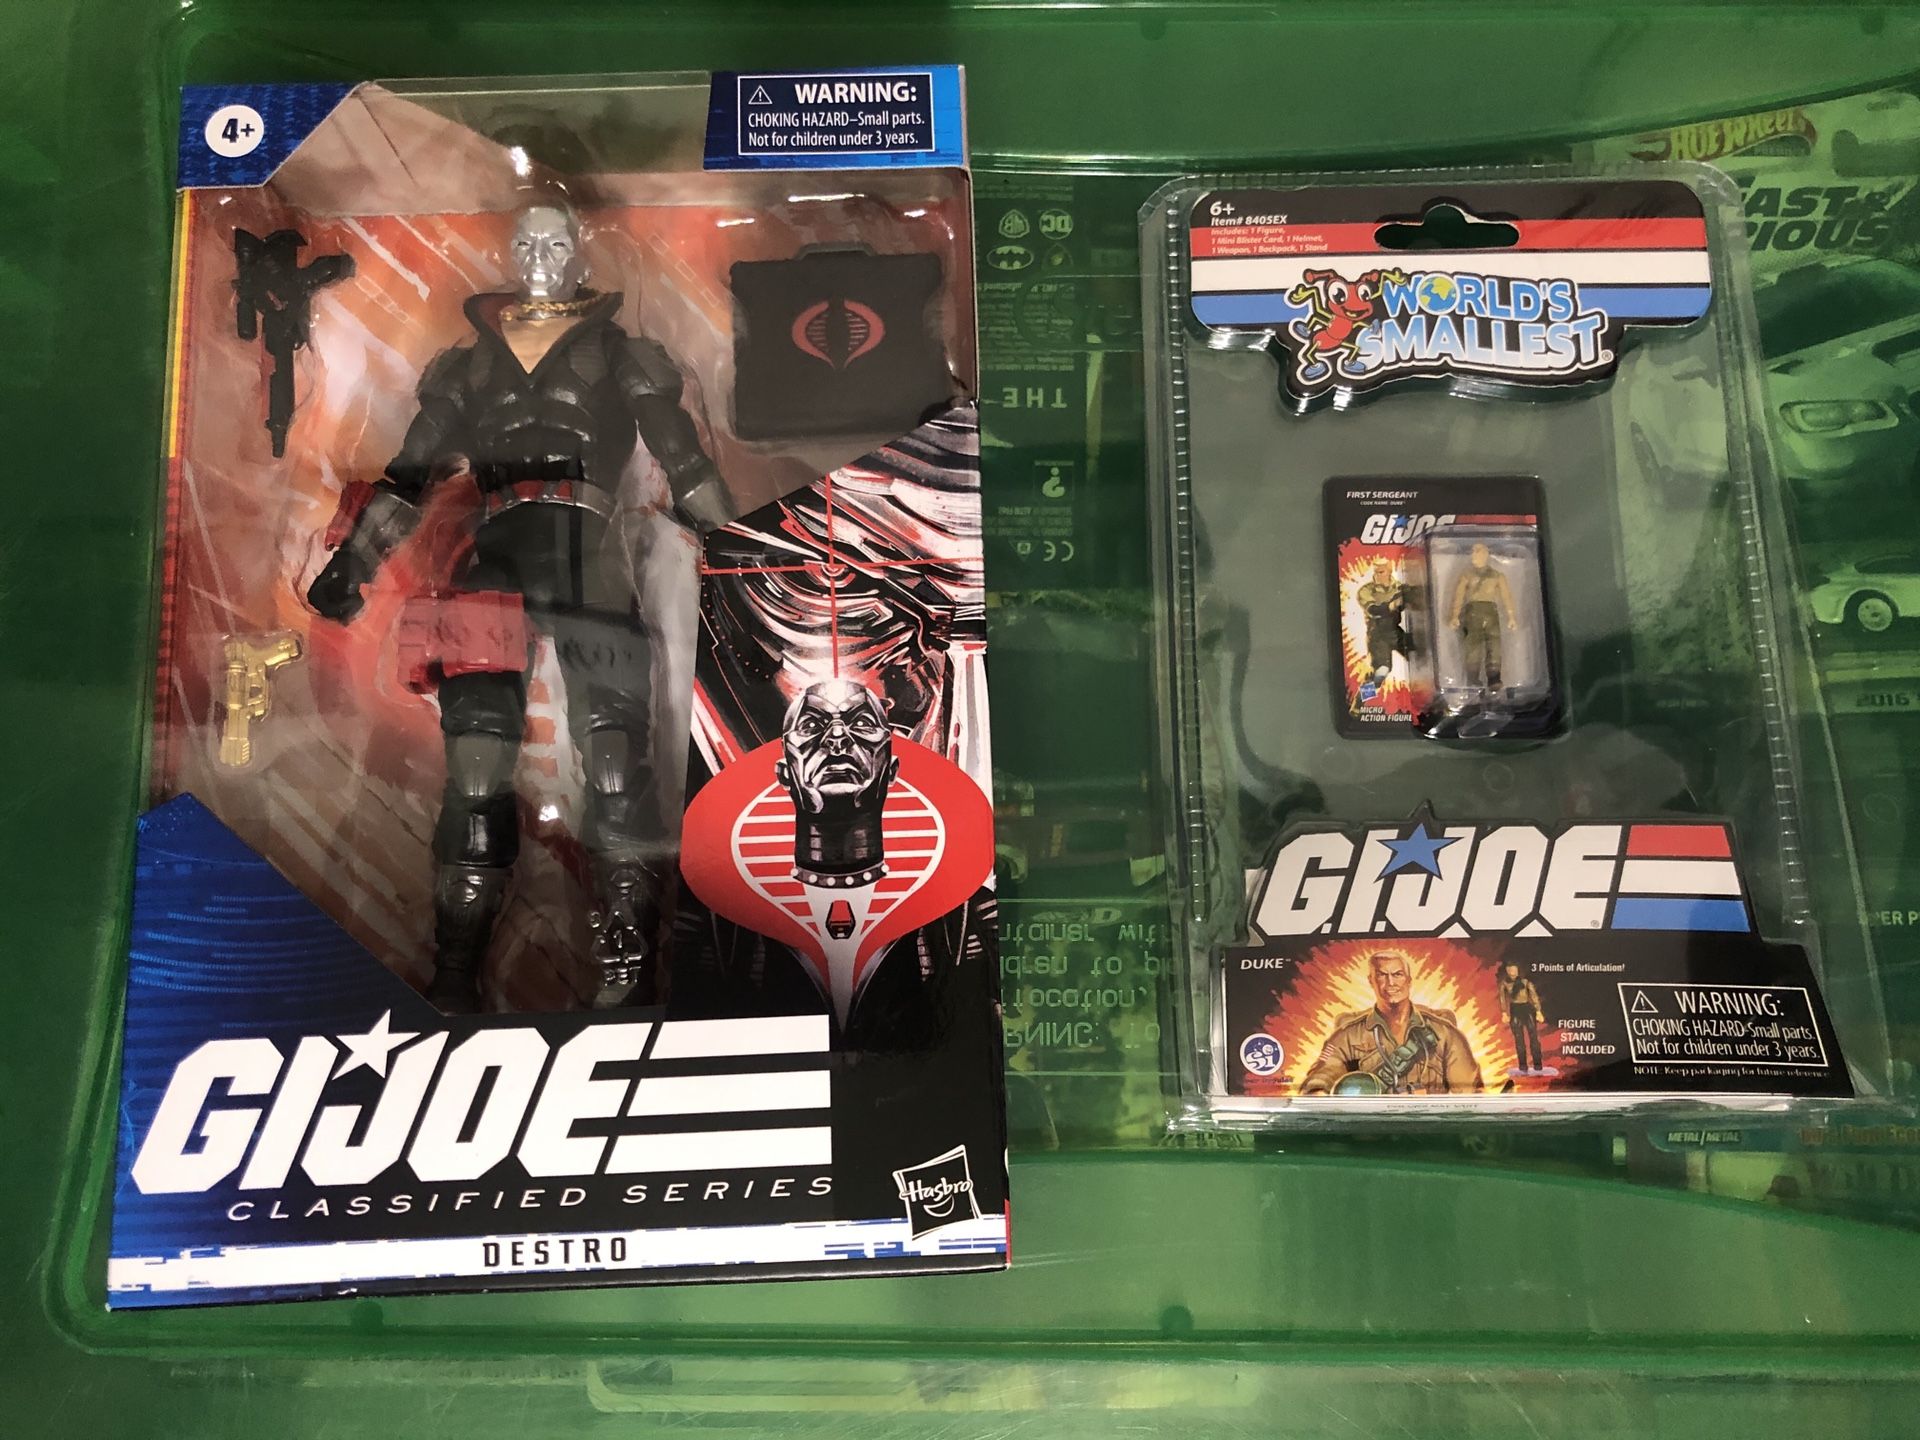 G.I. Joe classified Series Destro